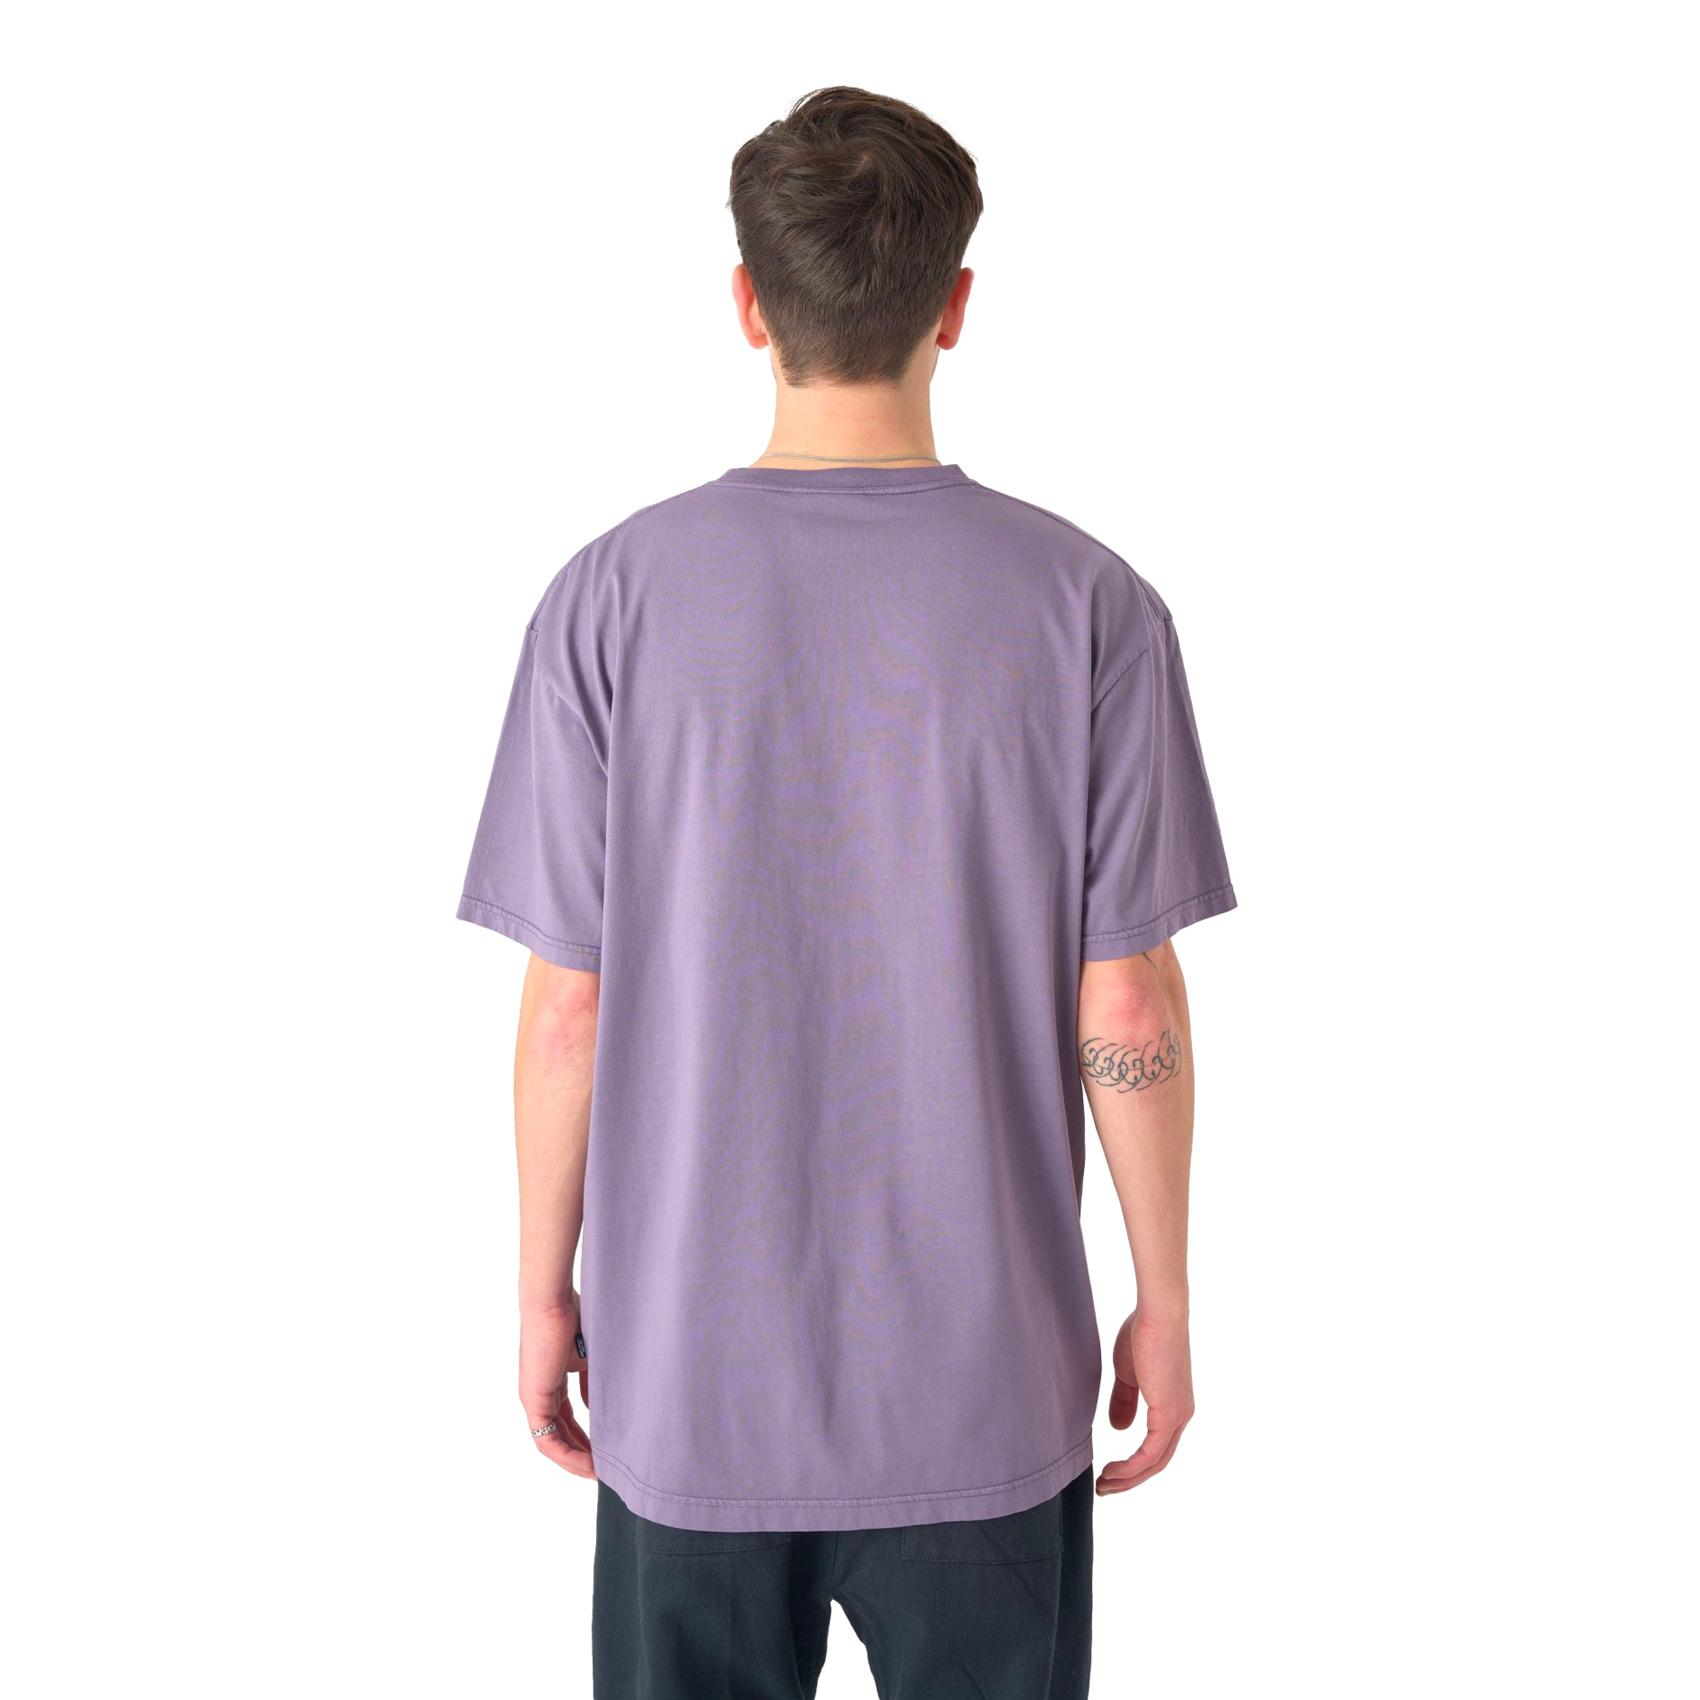 Cleptomanicx T-Shirt Evolution (montana grape)